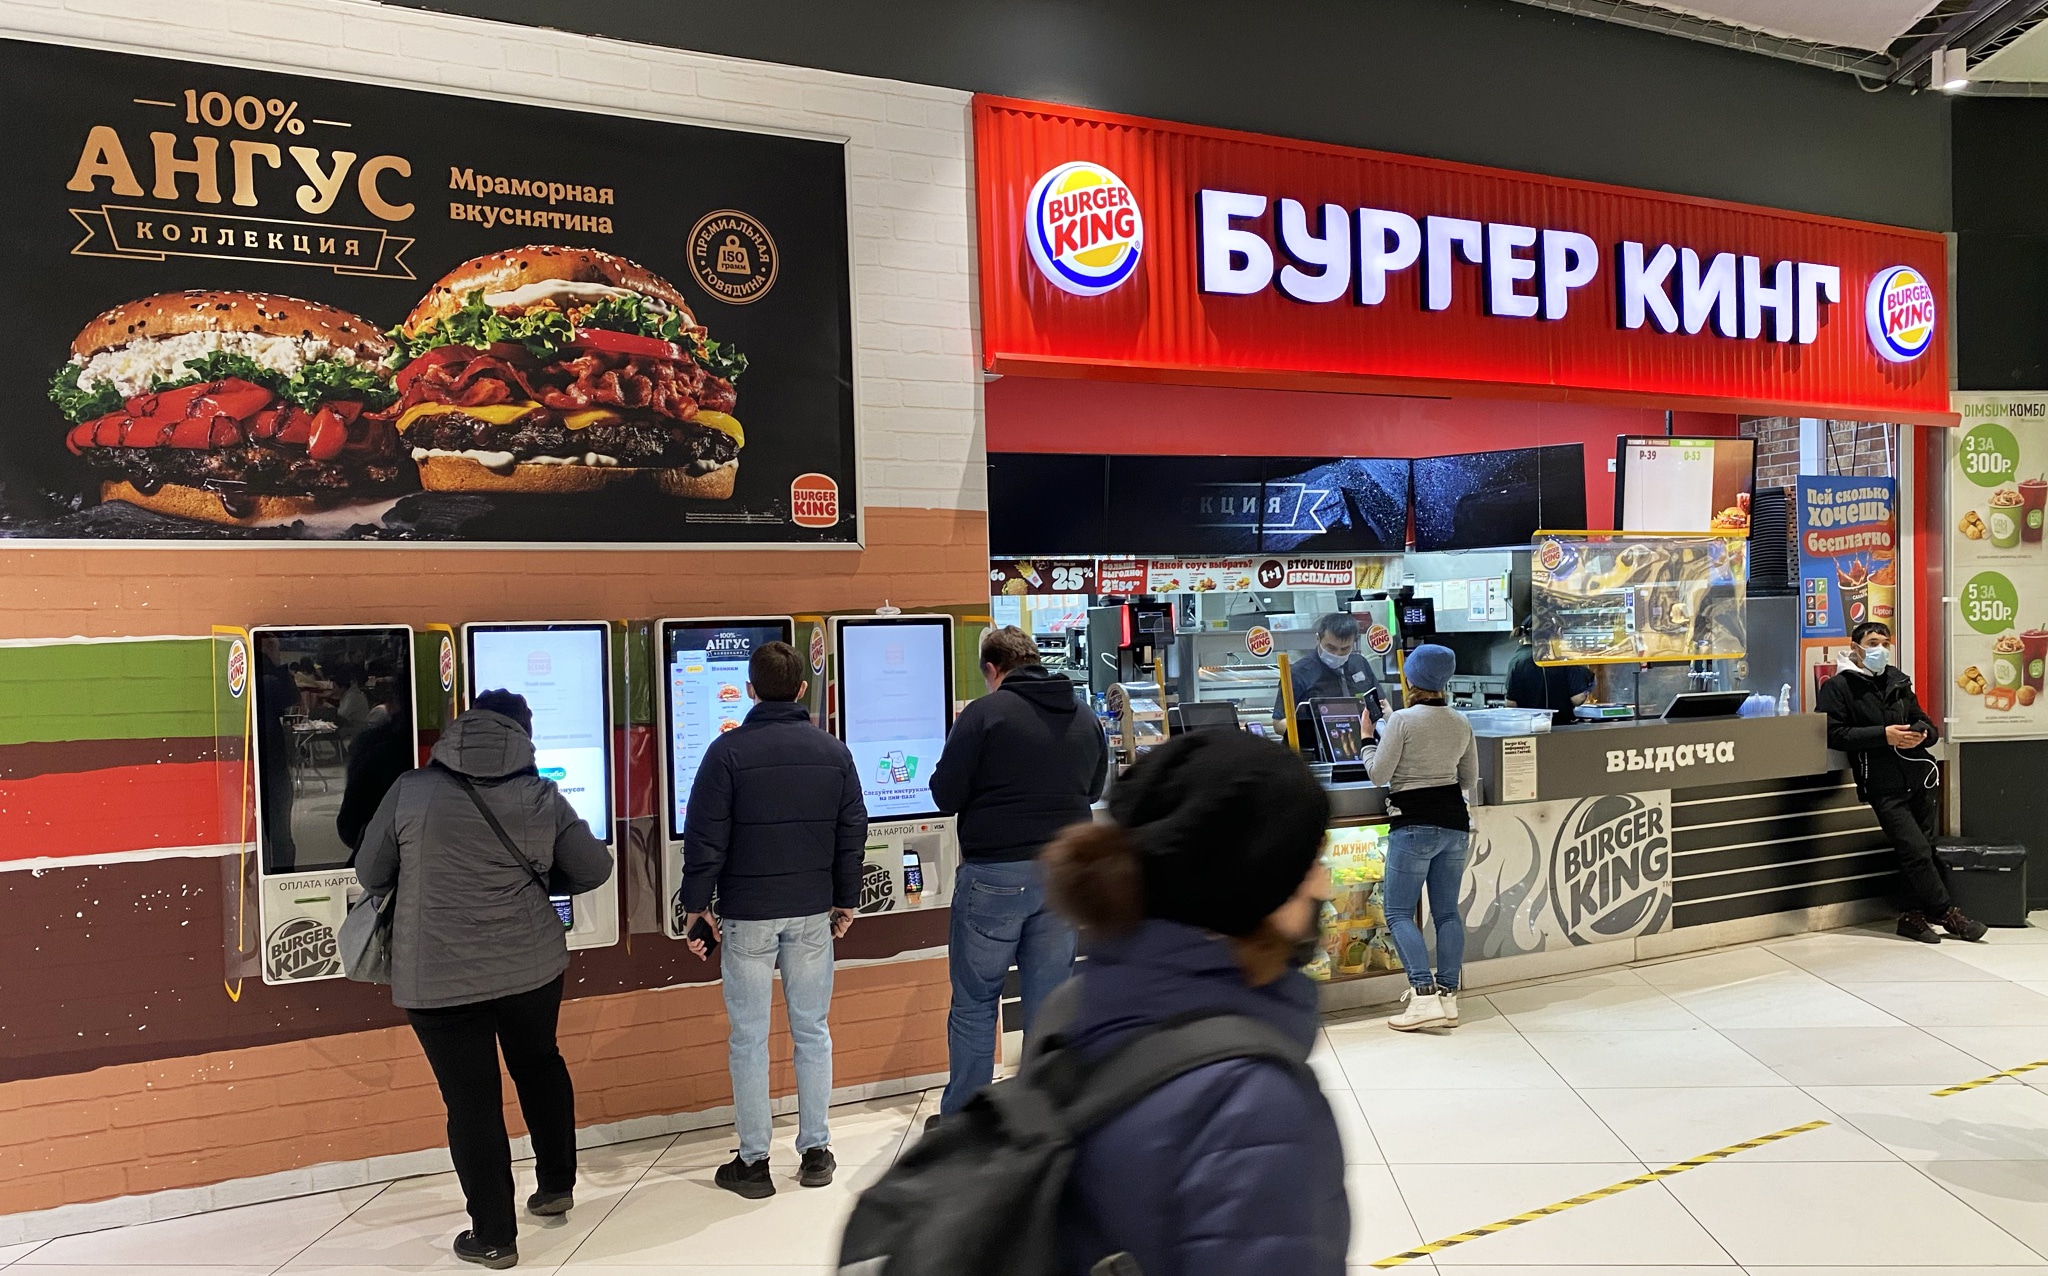 Burger King Localization Russia